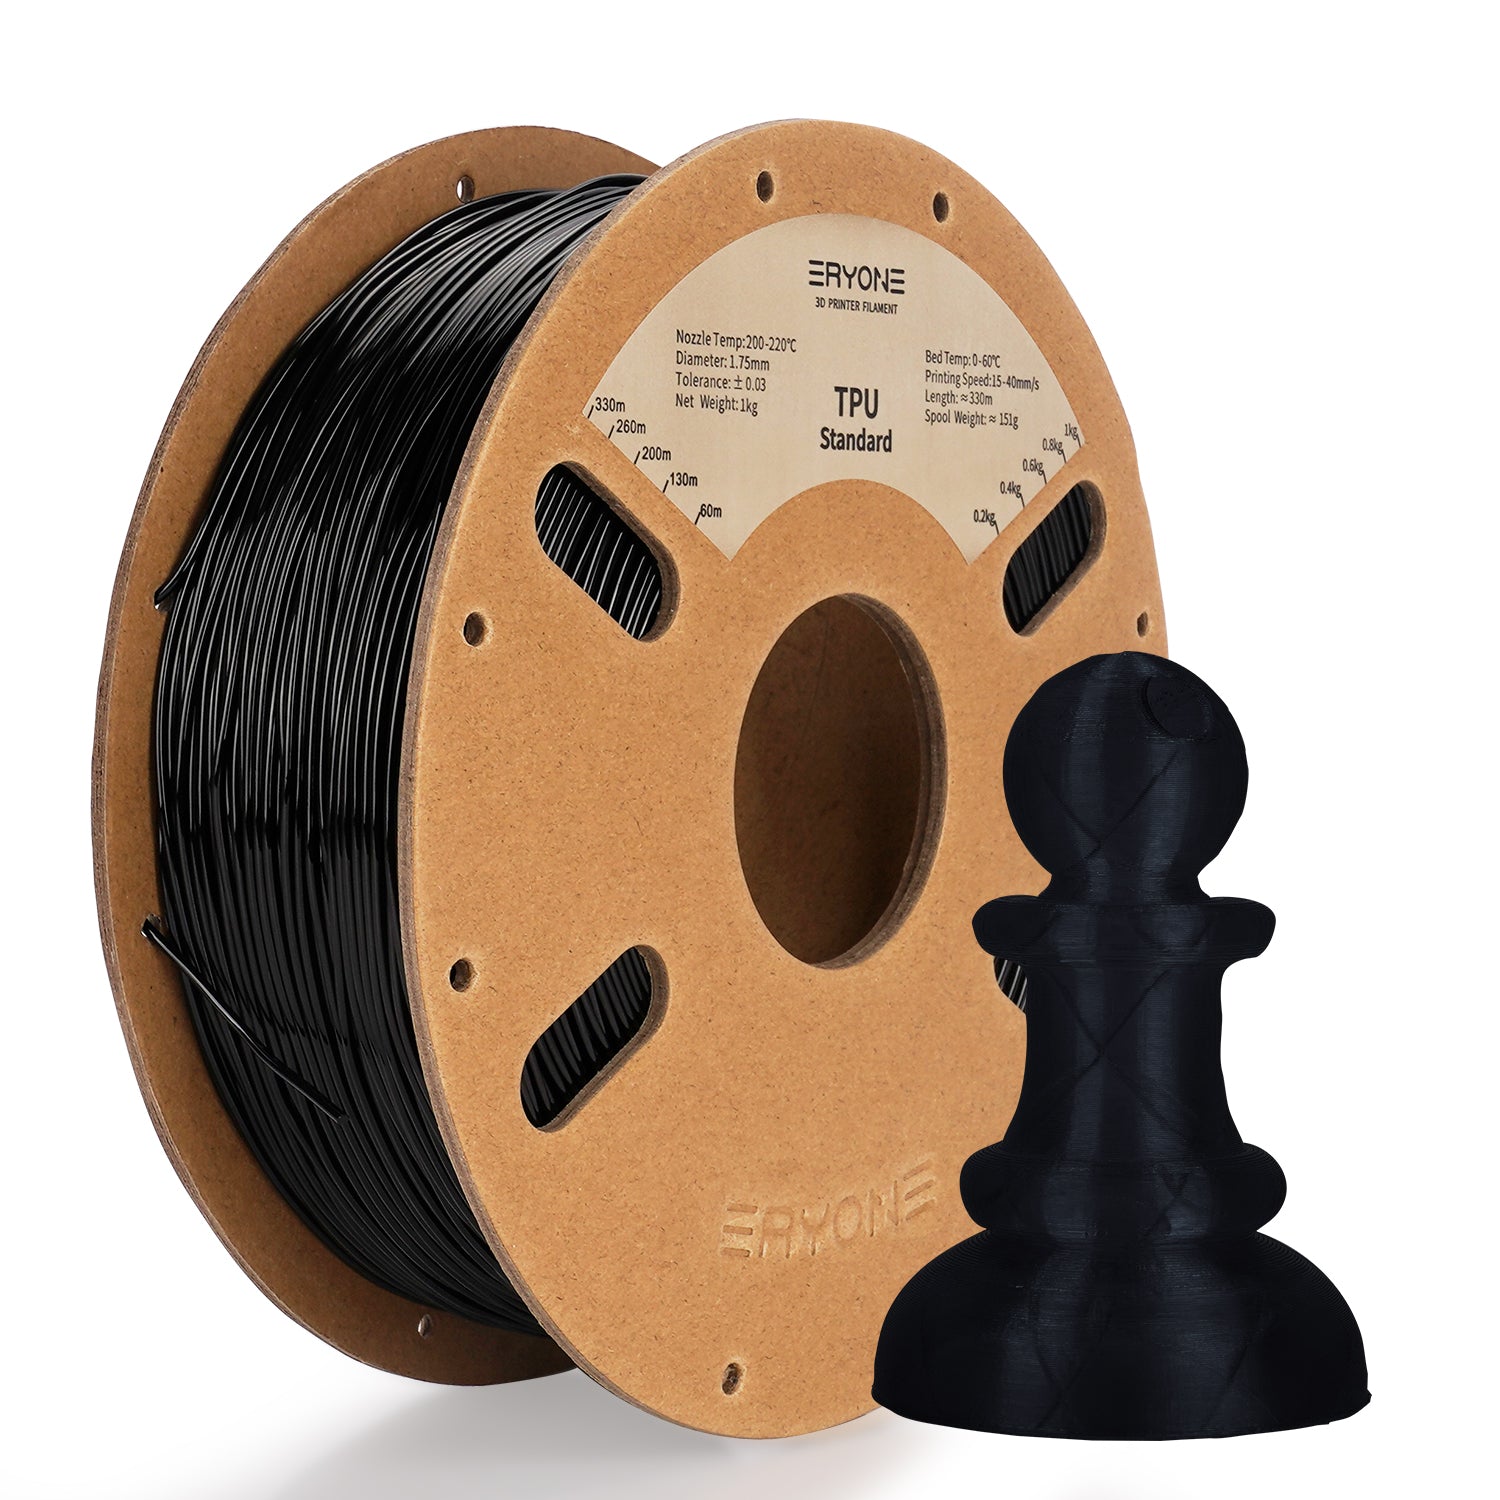 ERYONE 1.75mm TPU 3D Printer Filament, Dimensional Accuracy +/- 0.05 mm, 0.5kg&1kg (1.1 LB) / Spool